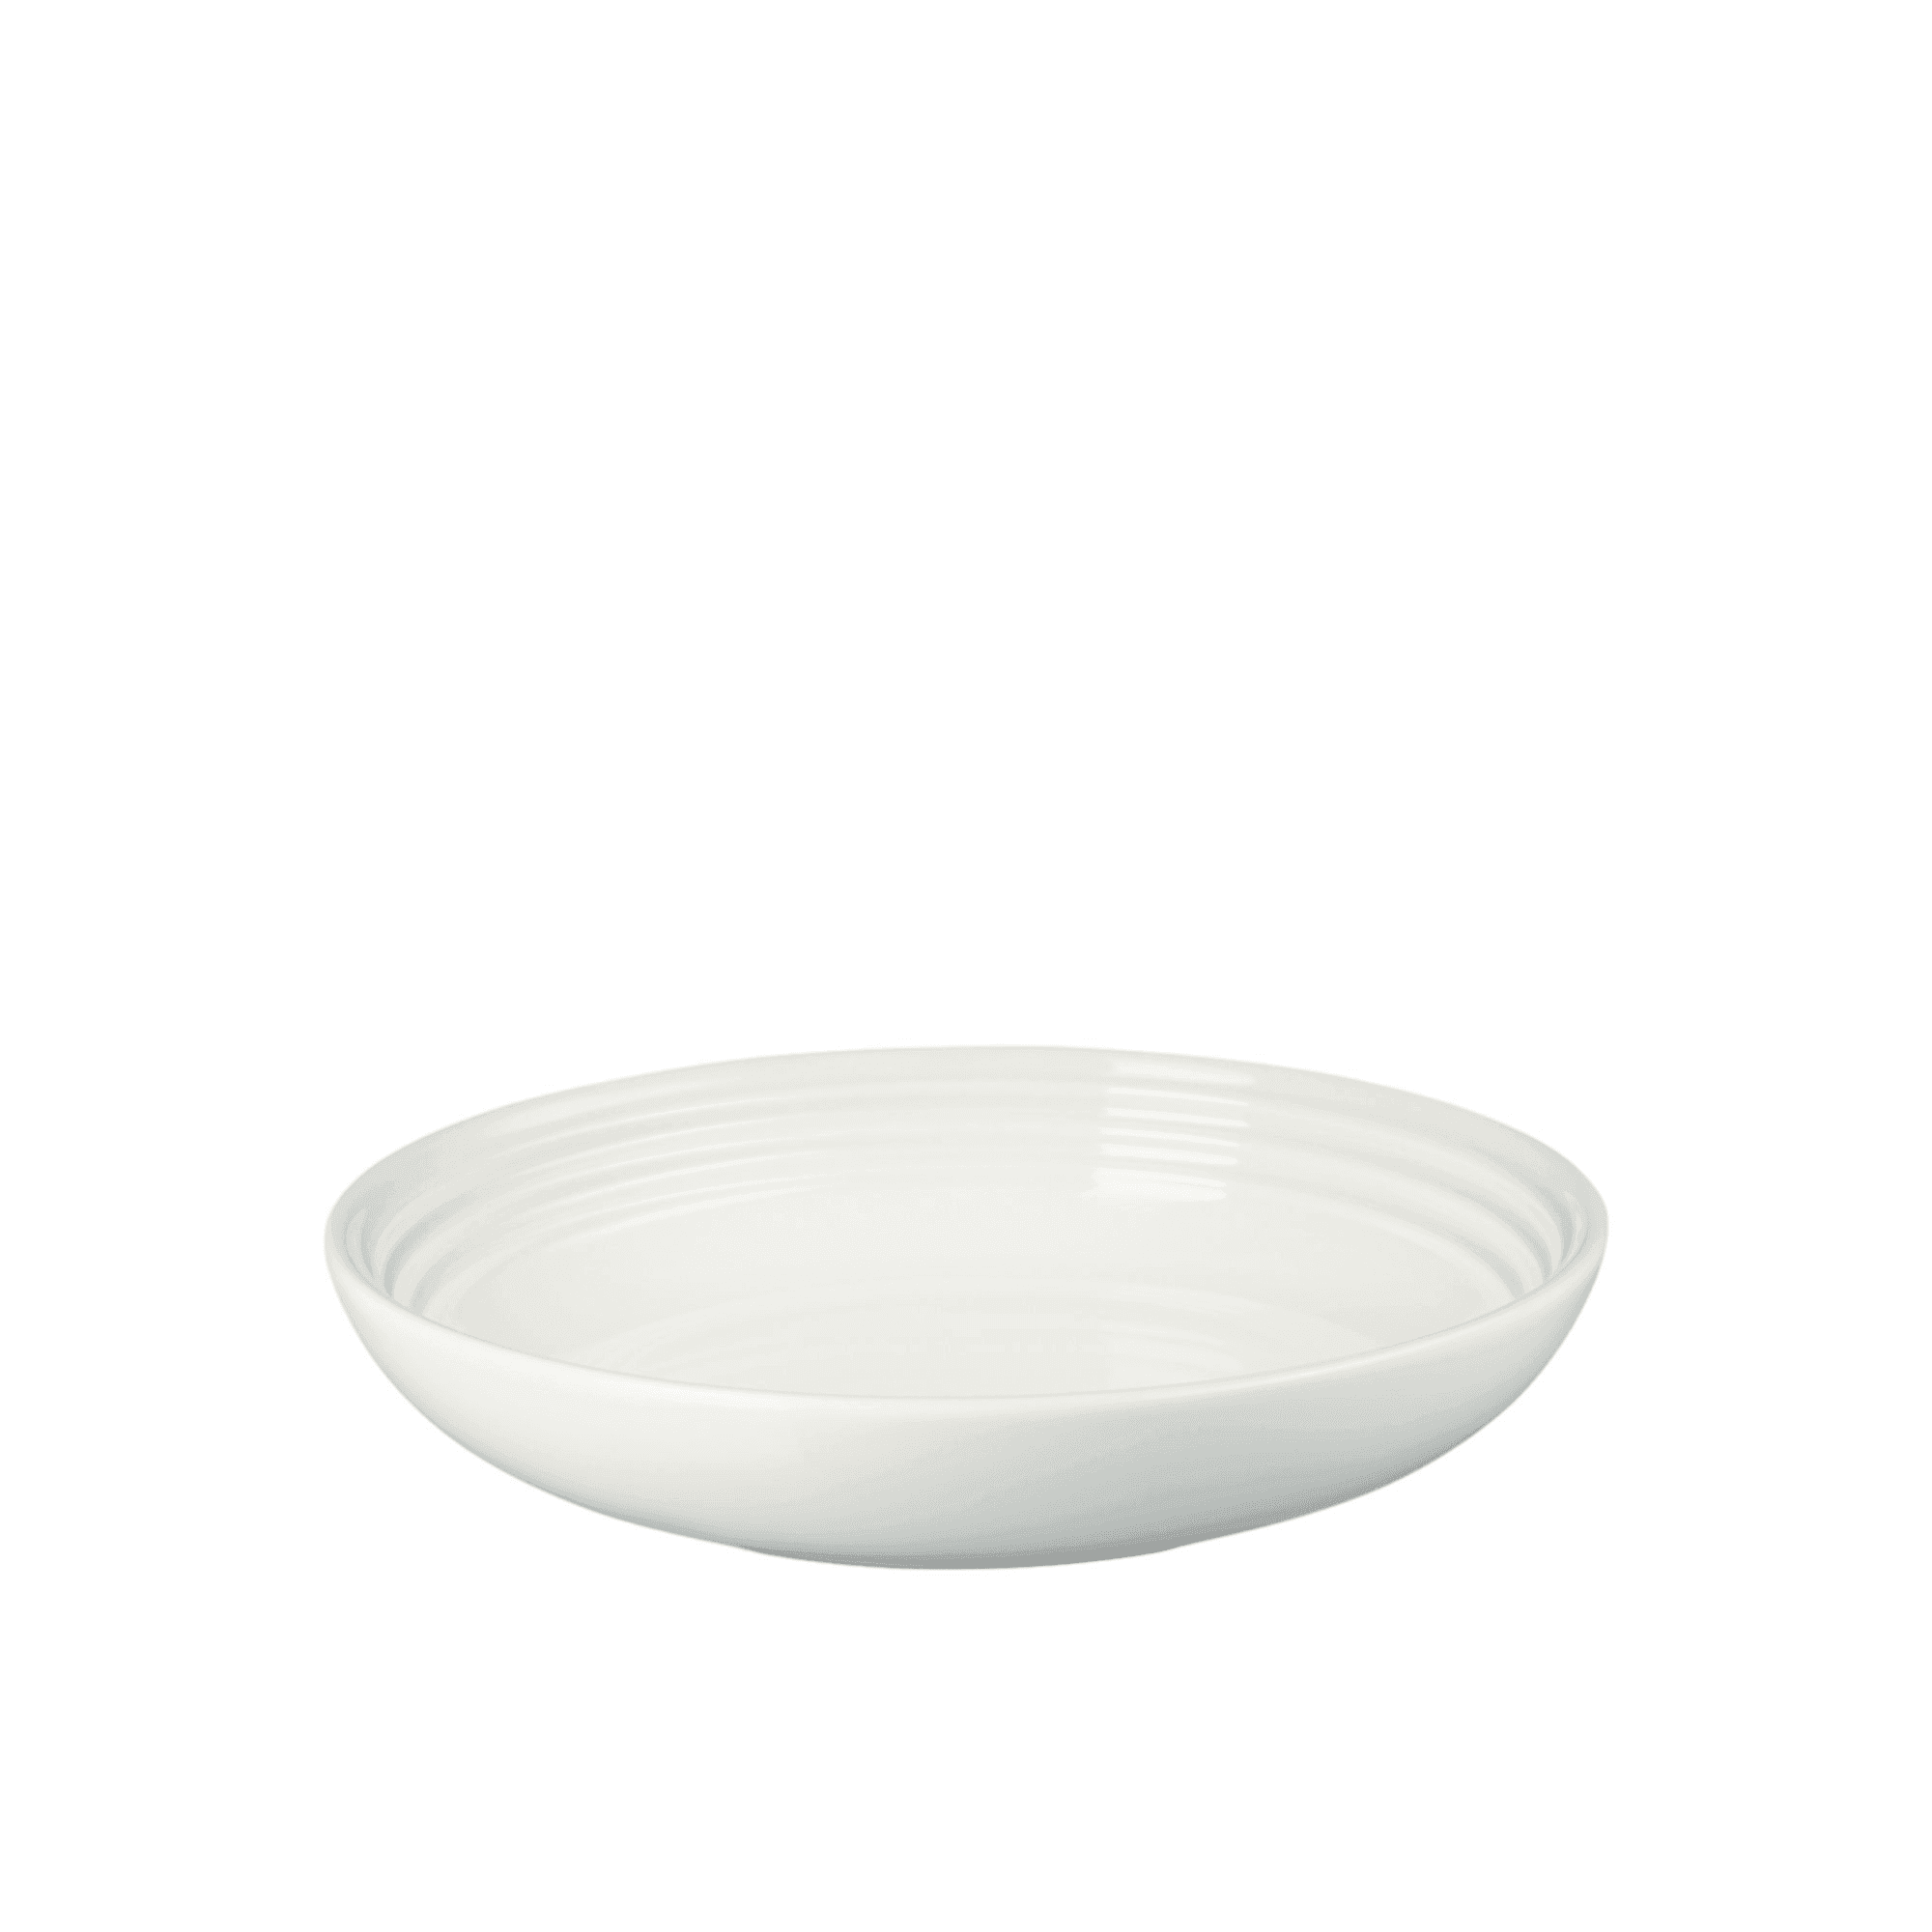 Le Creuset Stoneware Pasta Bowl 22cm Meringue Image 1